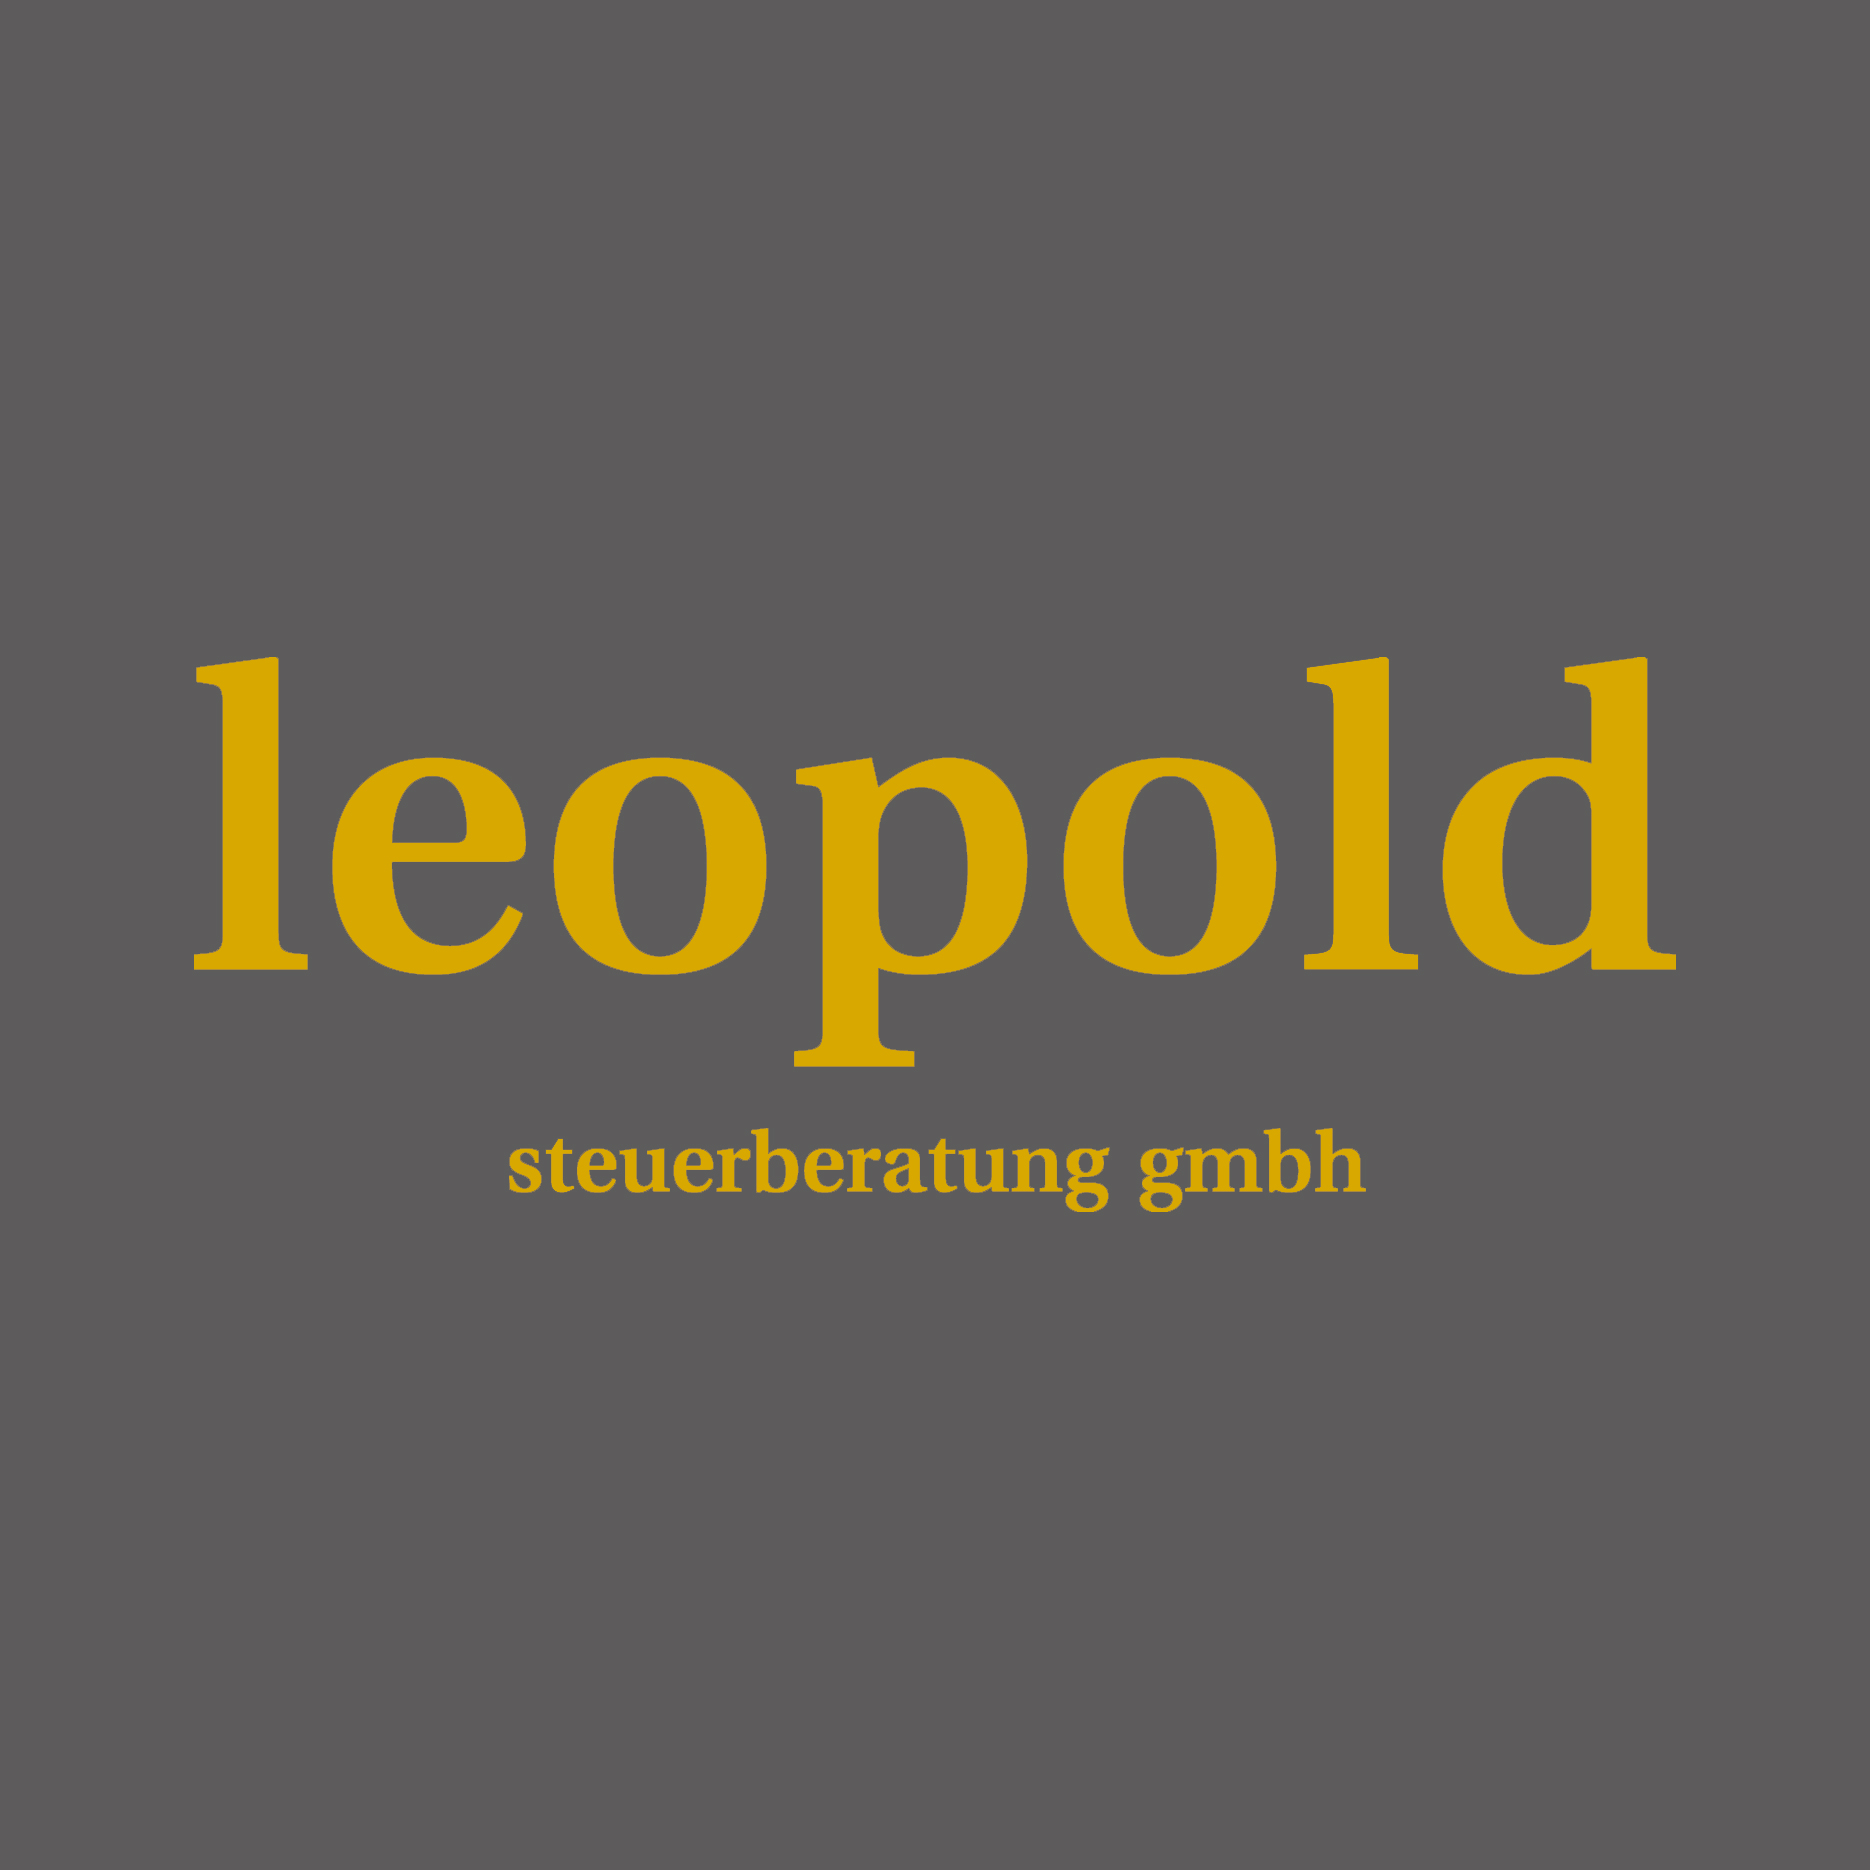 Logo - leopold steuerberatung gmbh